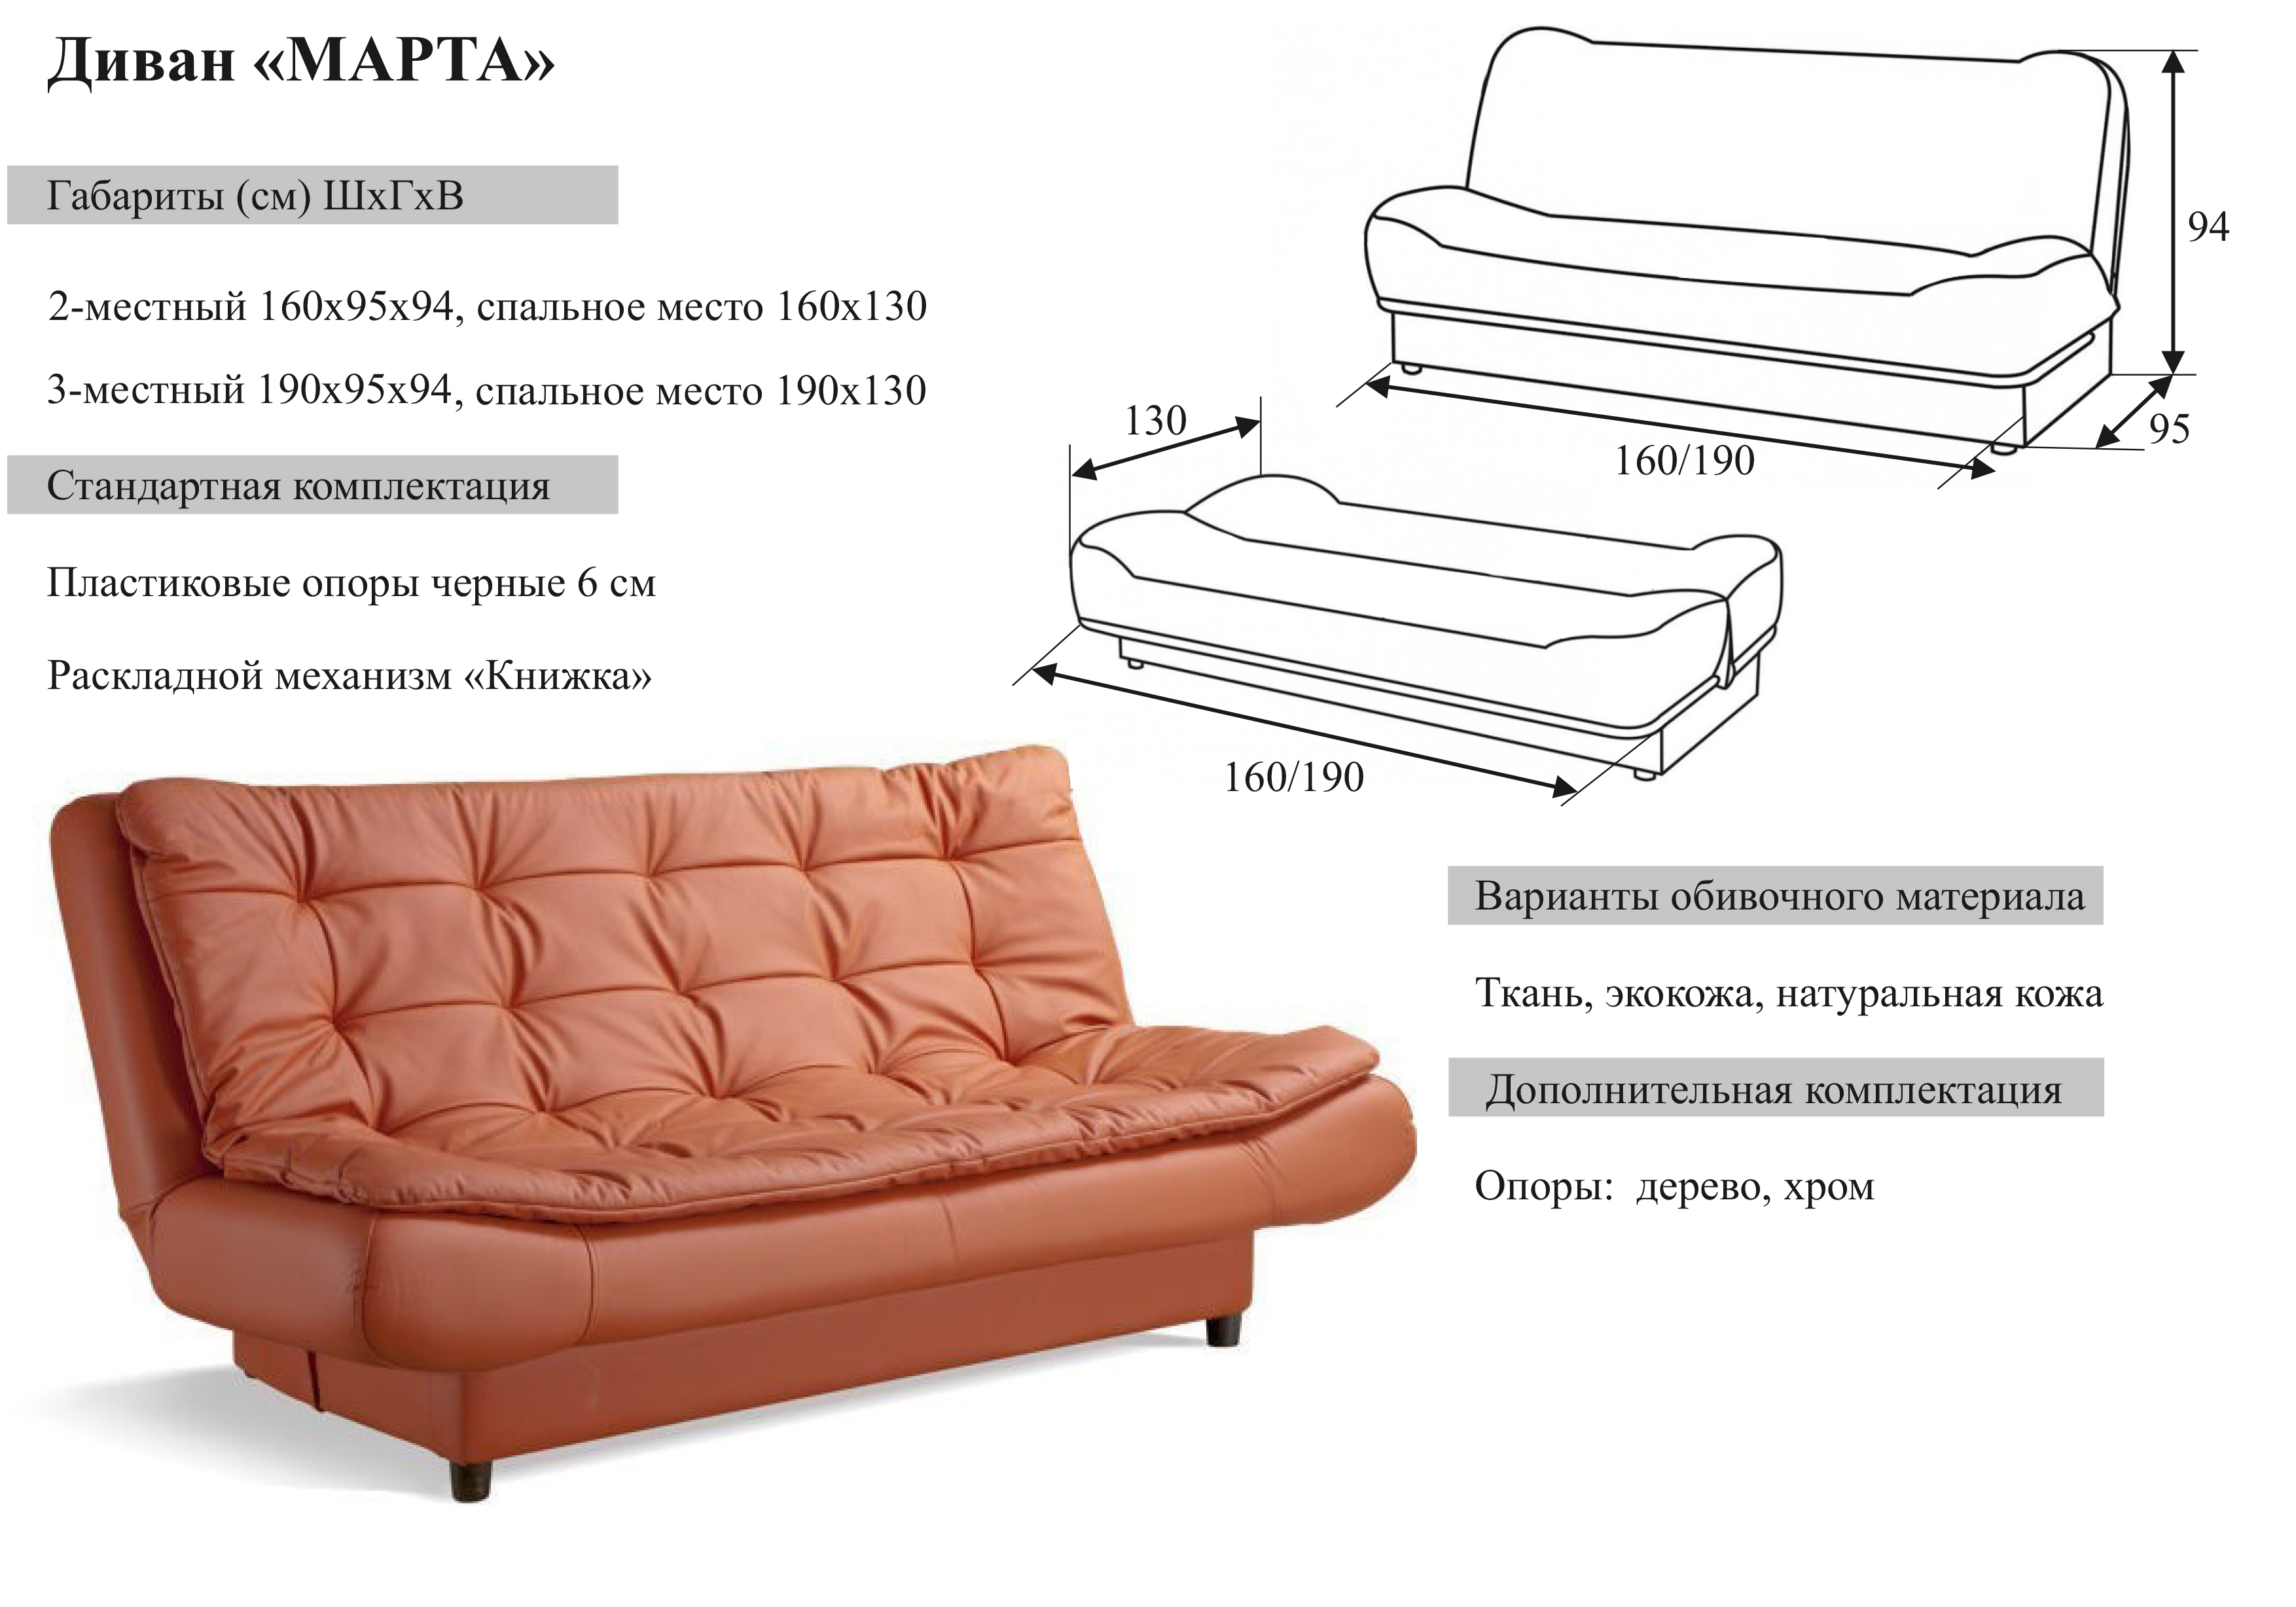 Схема дивана книжки Марта с размерами